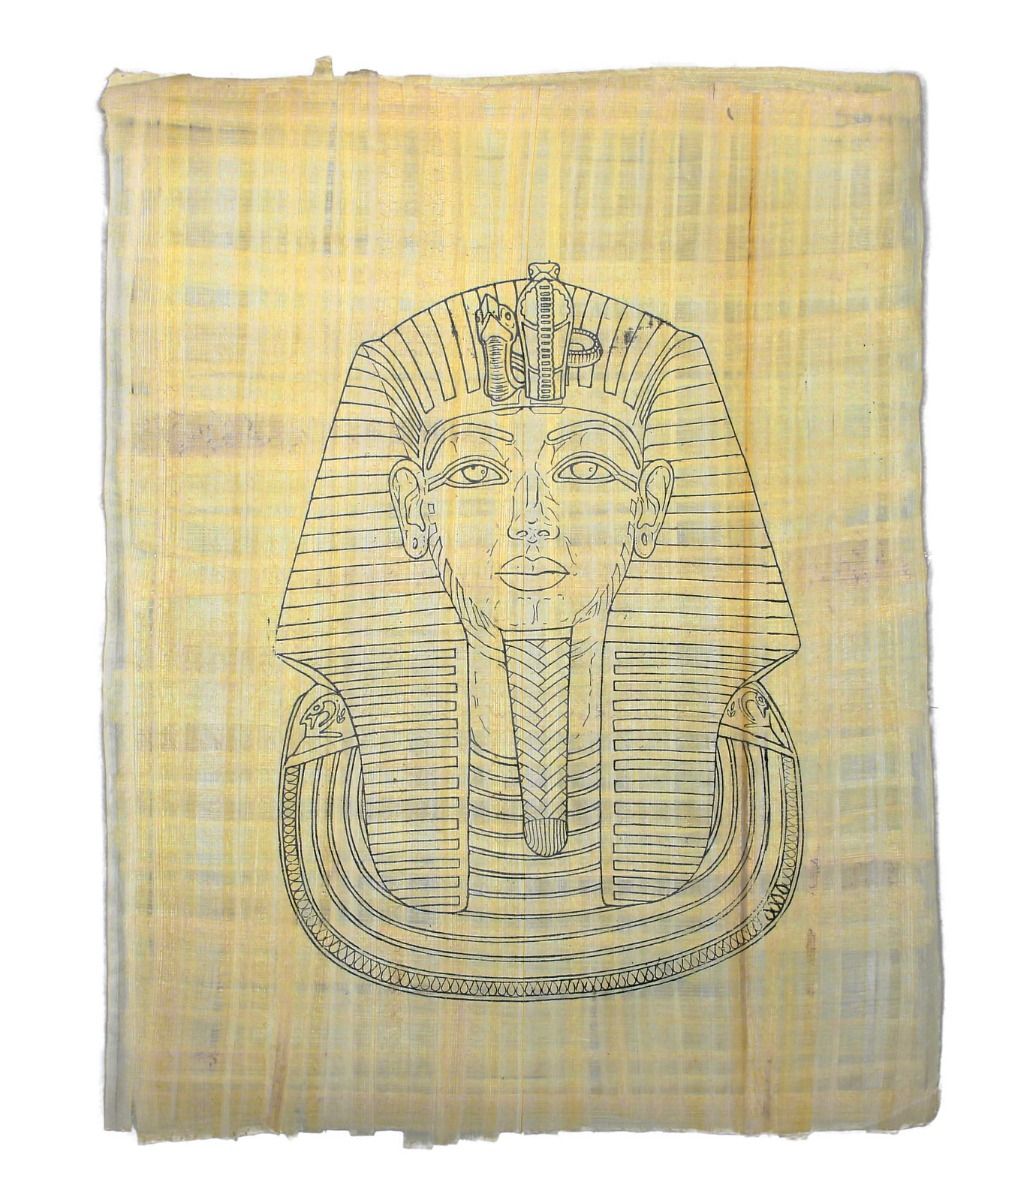 Totenmaske des Tut Anch Amun